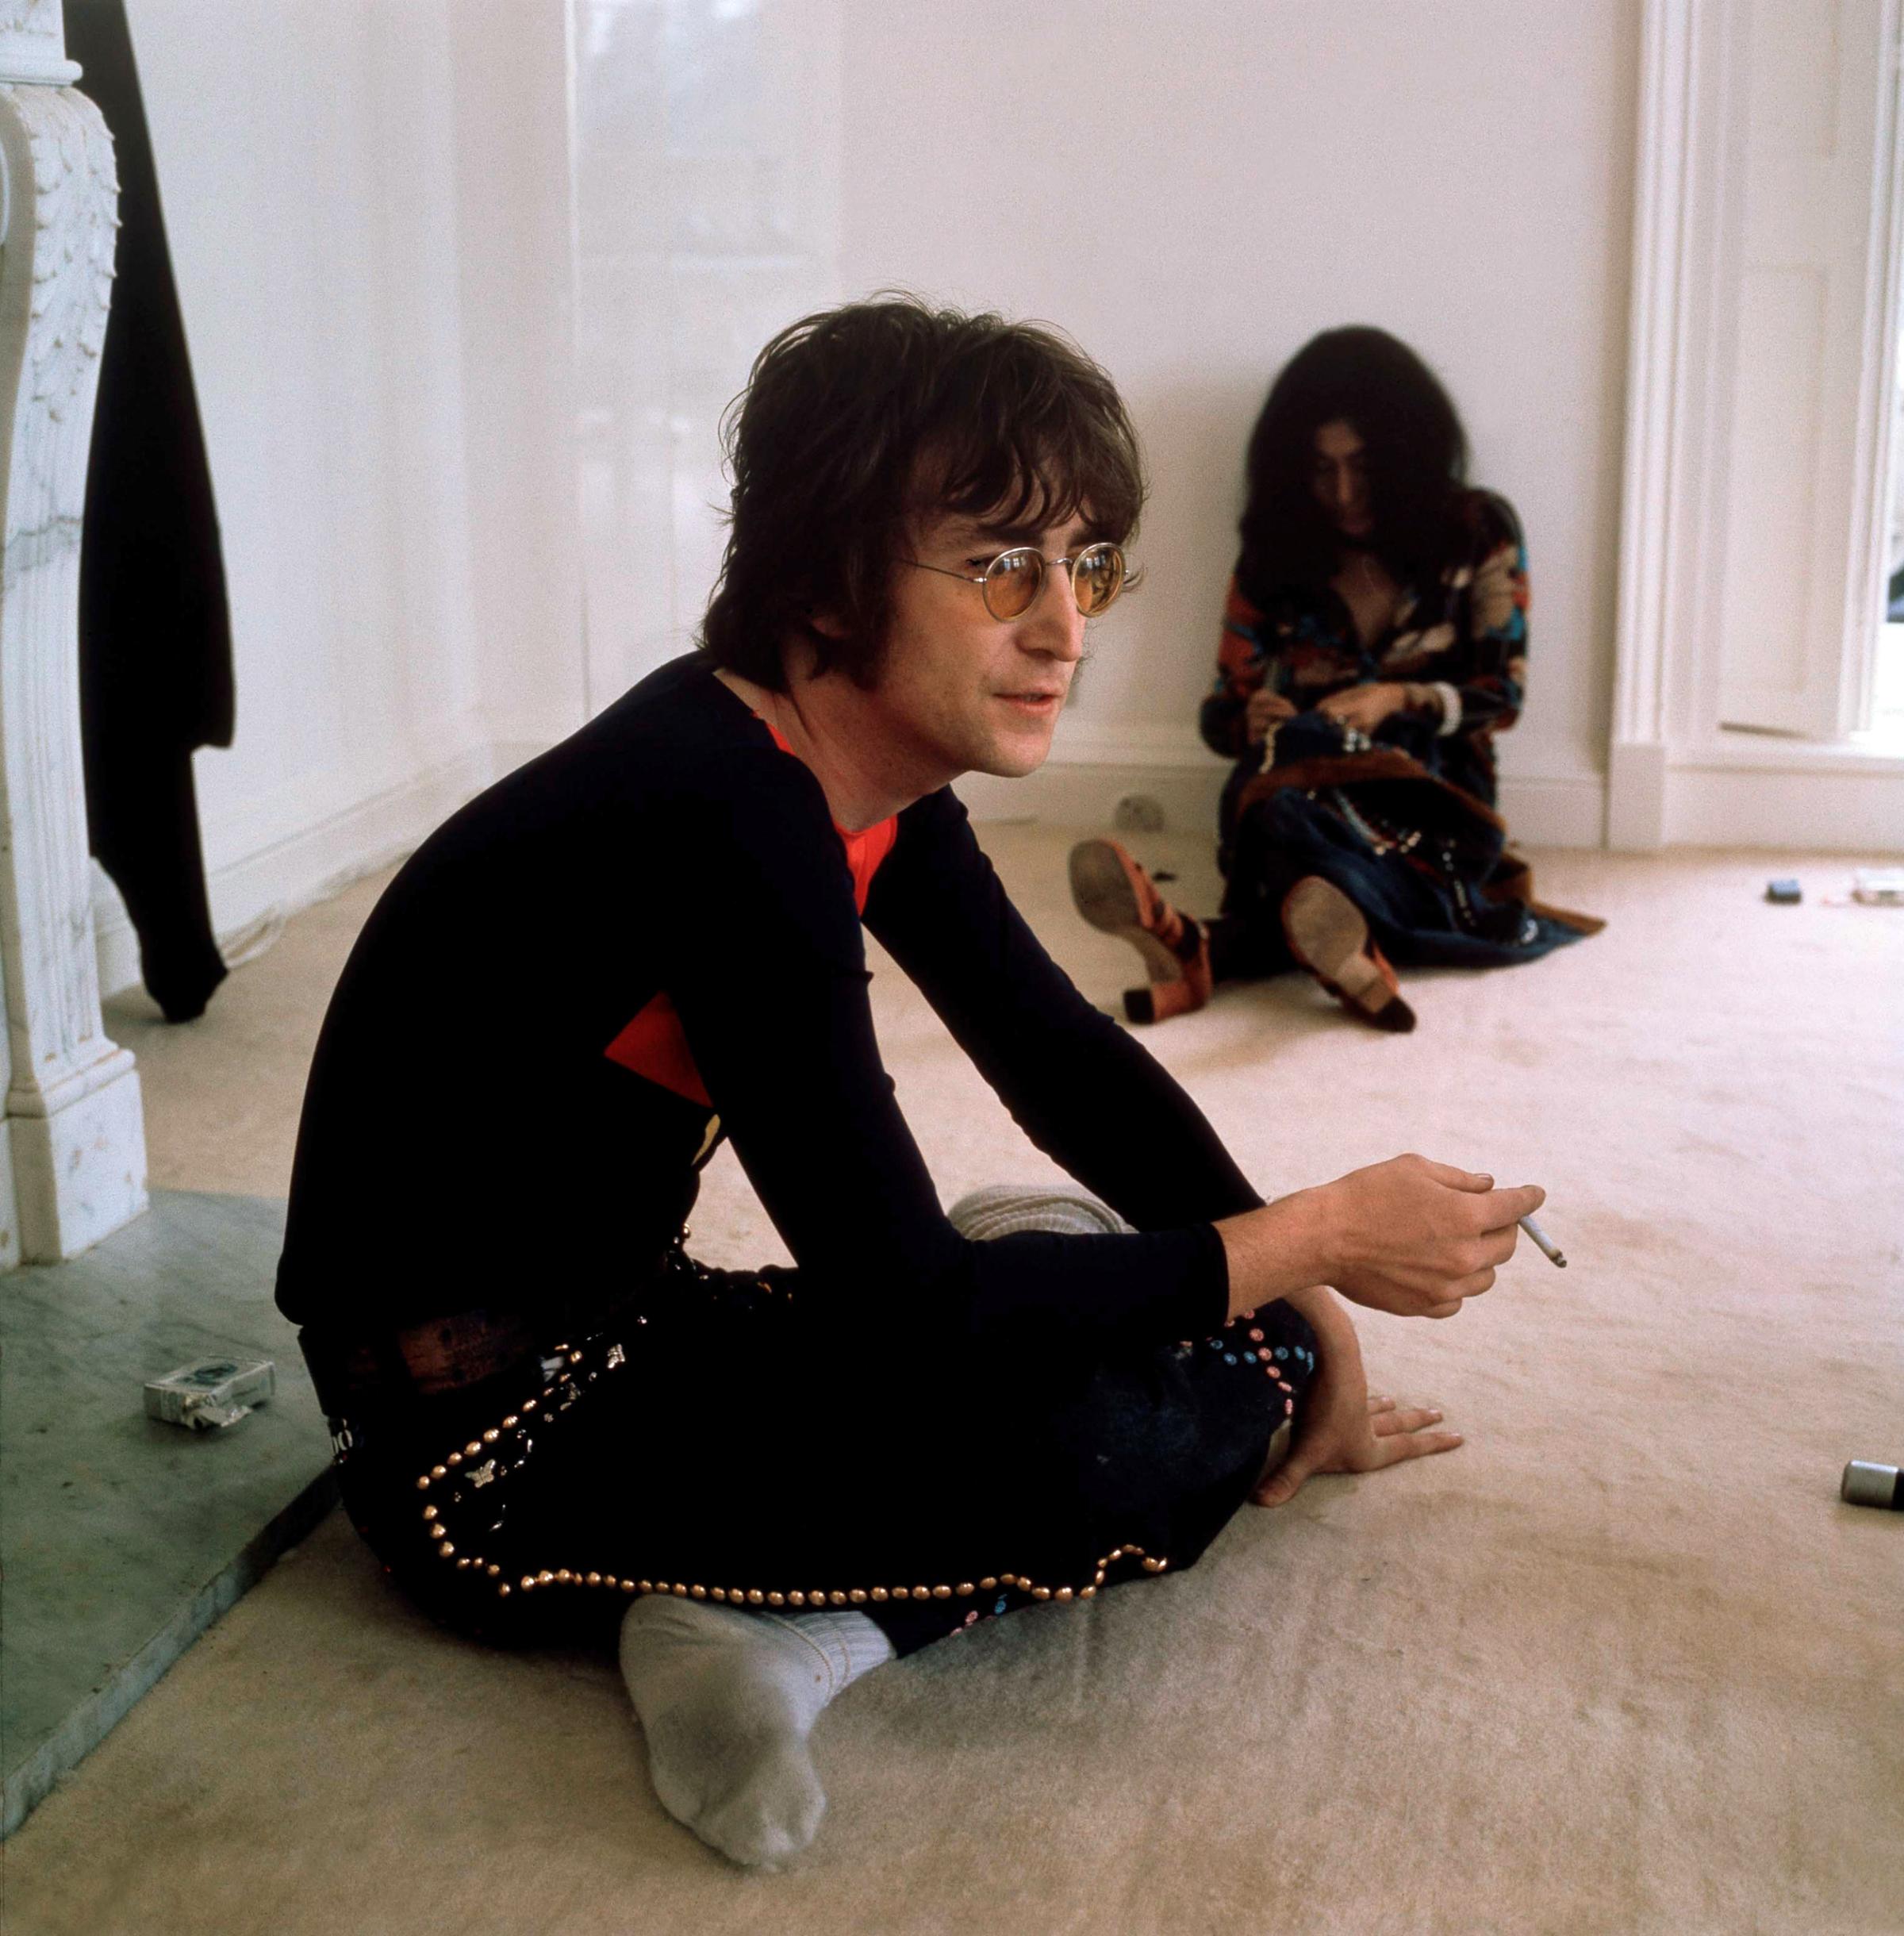 Former Beatle John Lennon with his wife Yoko Ono at his home, Tittenhurst Park, near Ascot, Berkshire, July 1971.